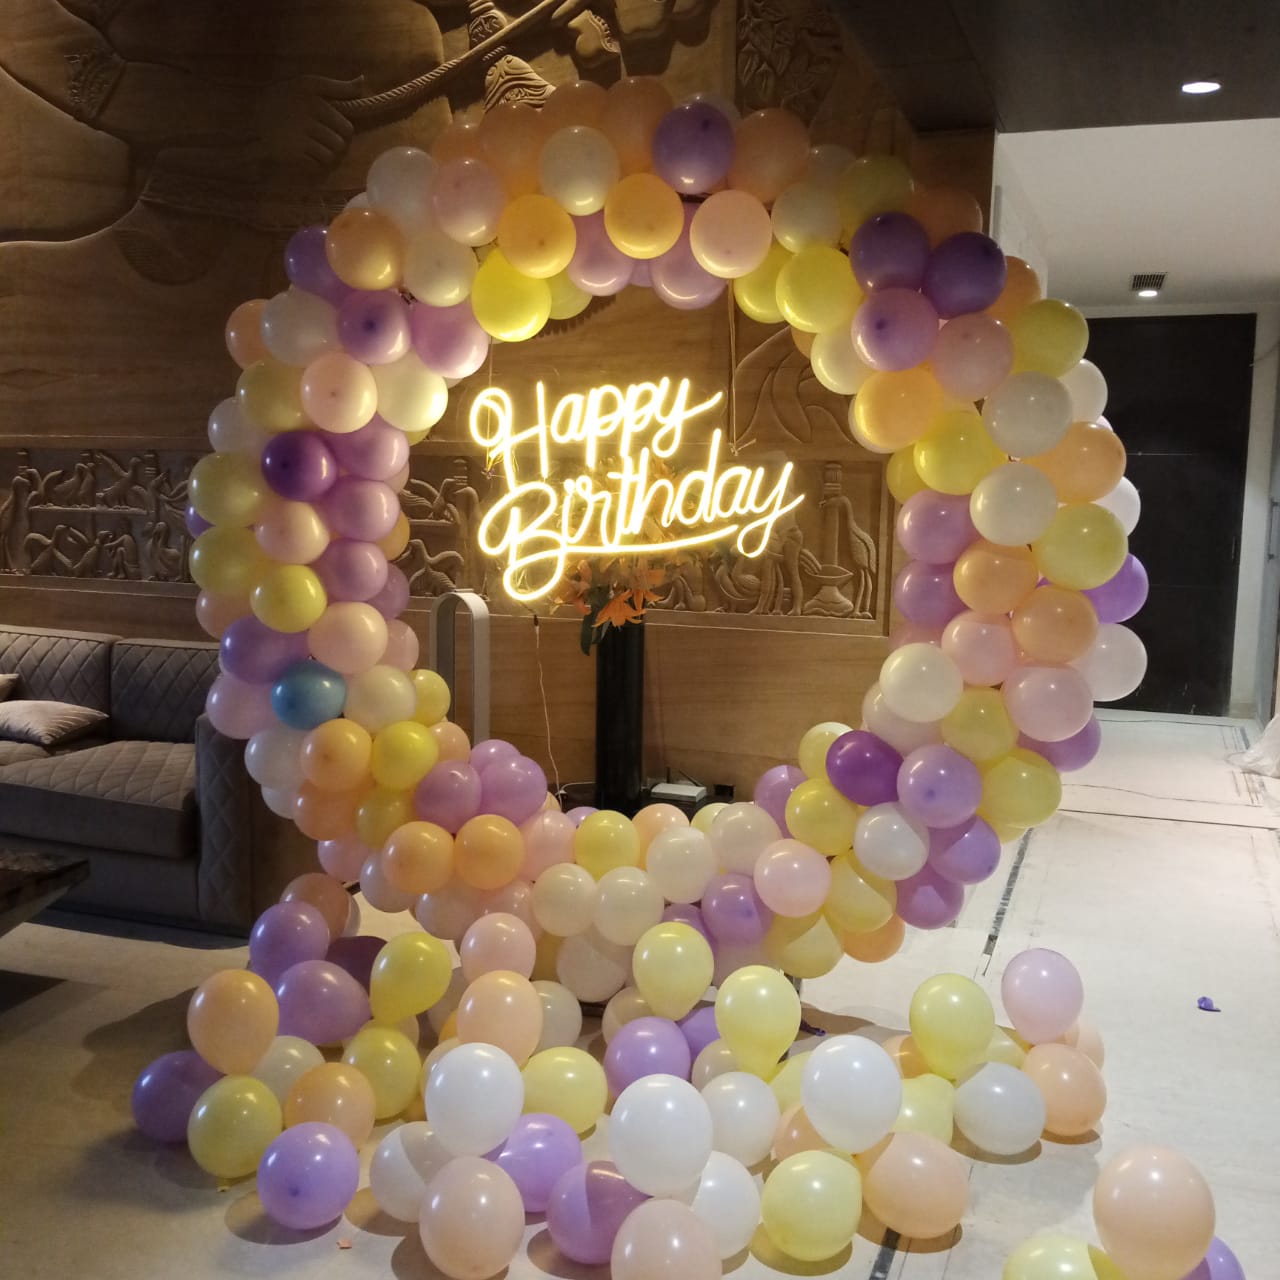 Classy Ring Balloon Decoration at Home, Hyderabad – ExperienceSaga.com